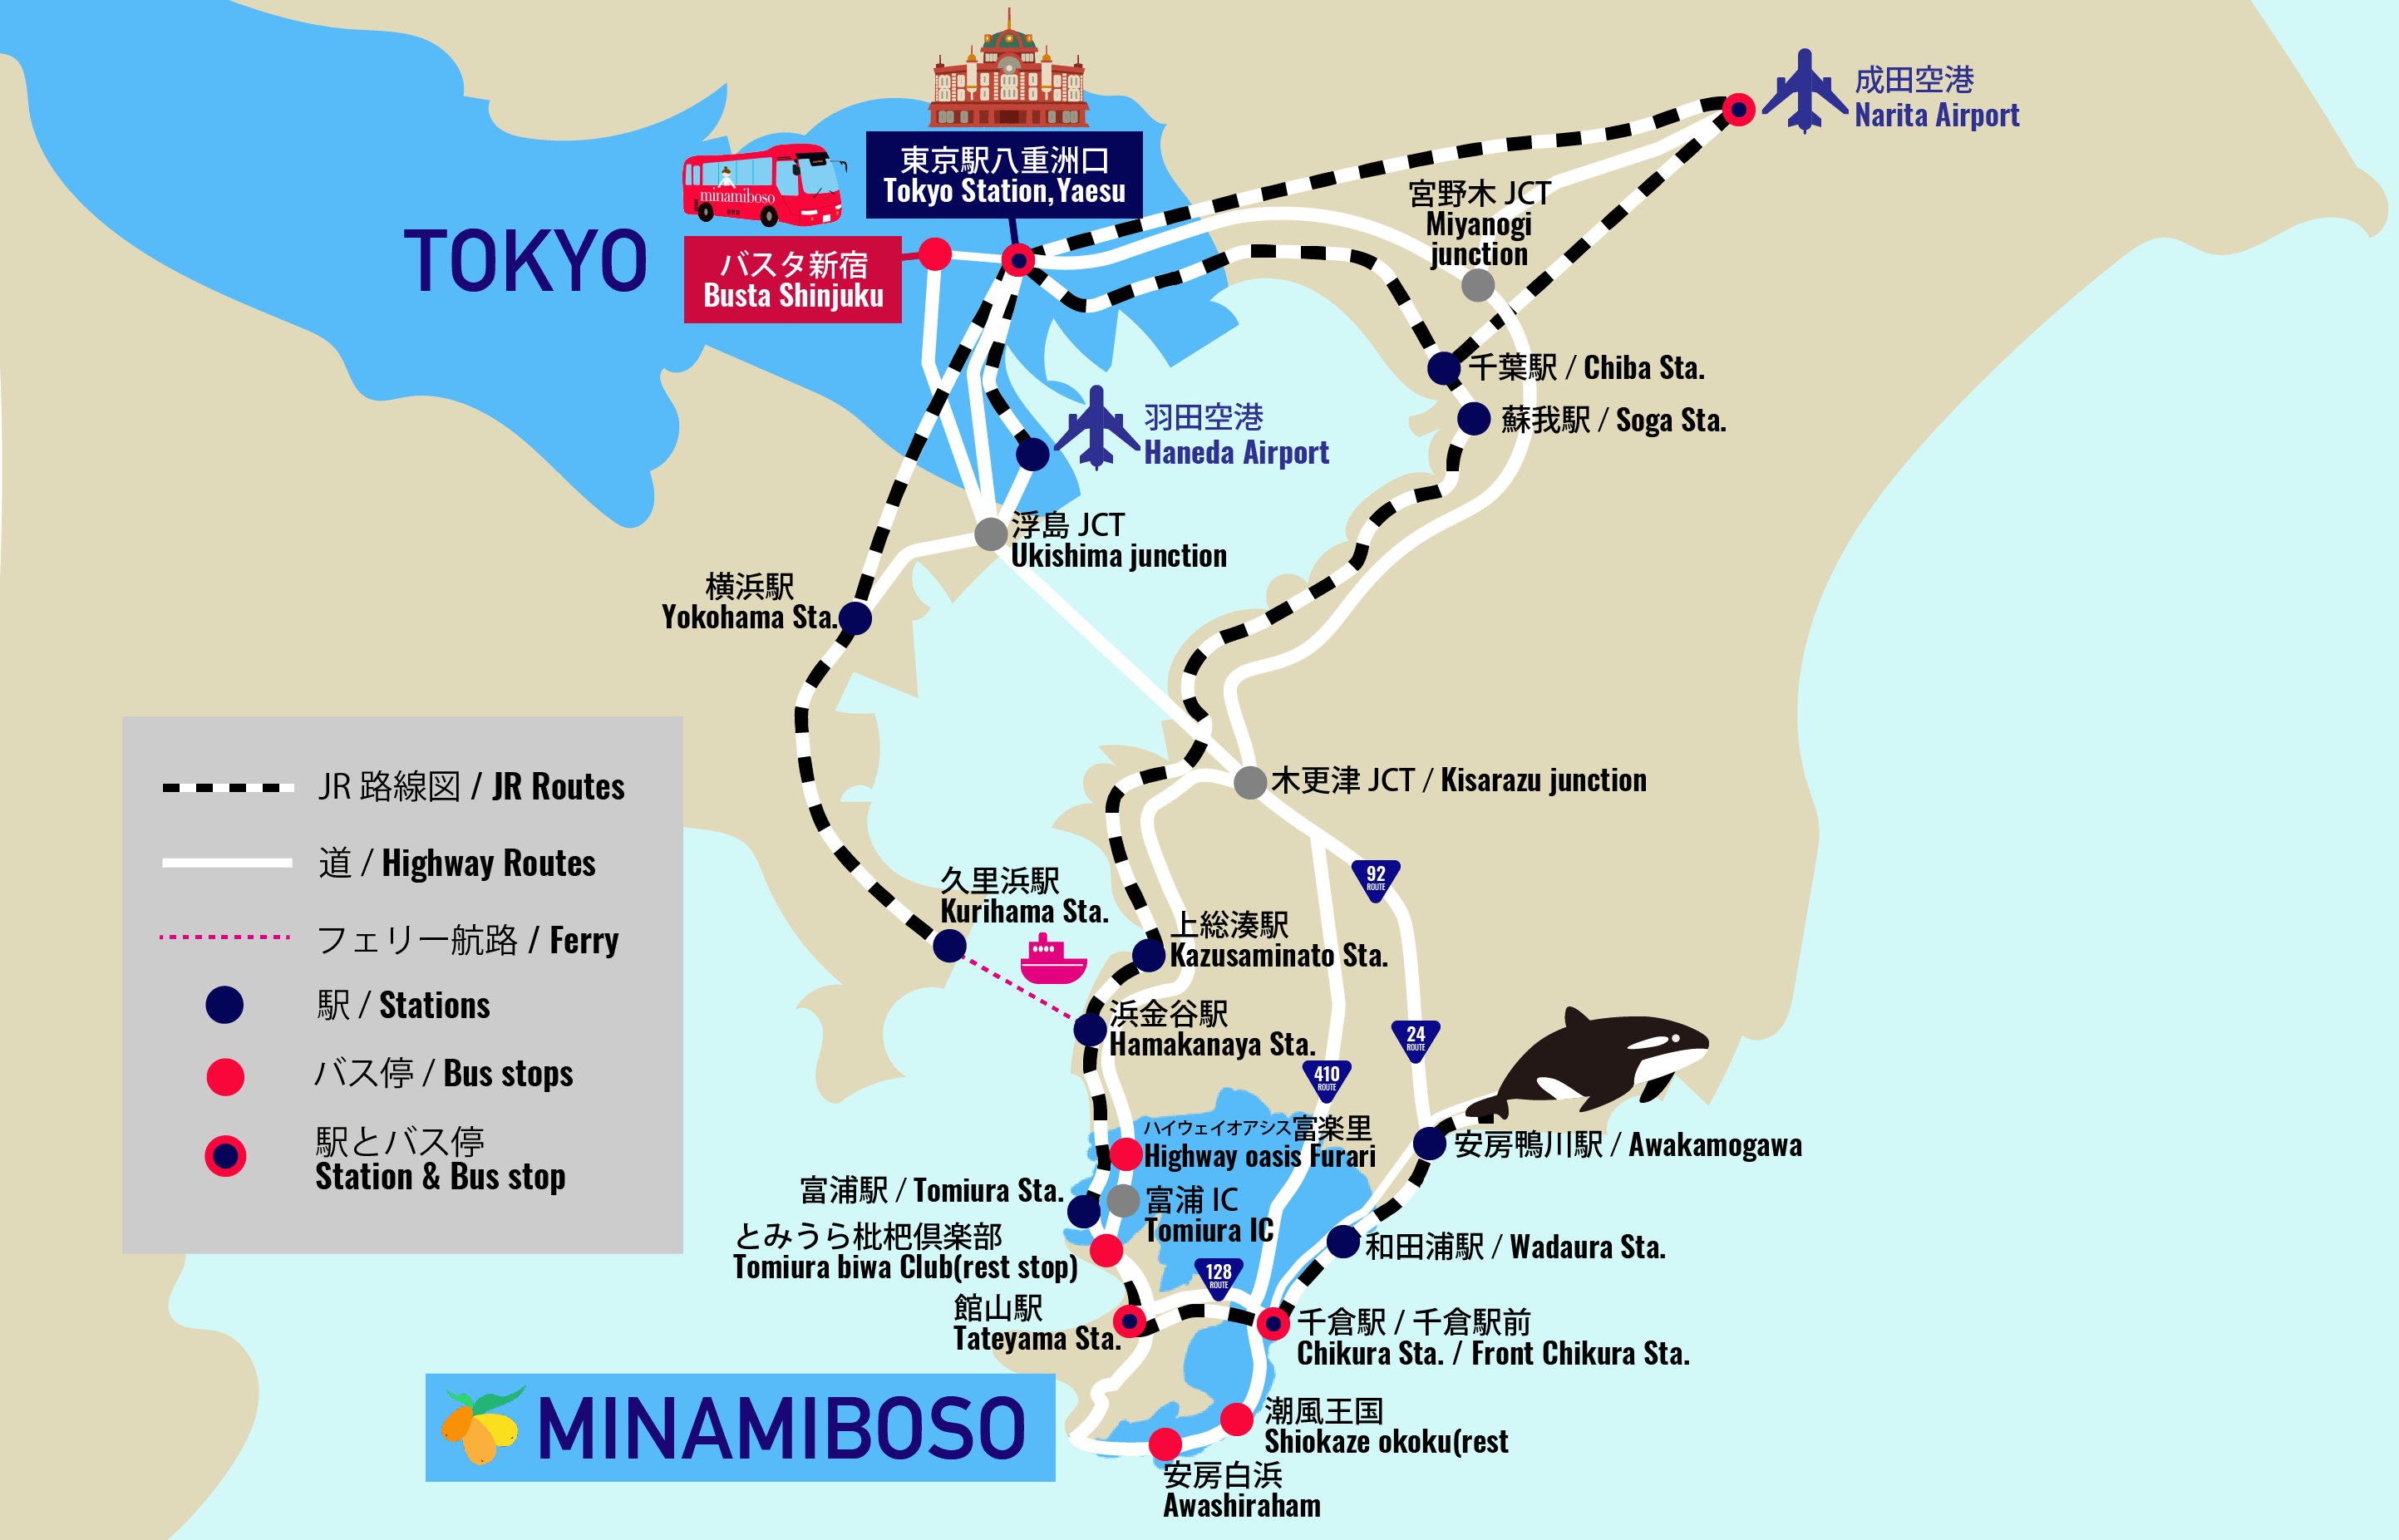 Getting to Minamiboso image 2